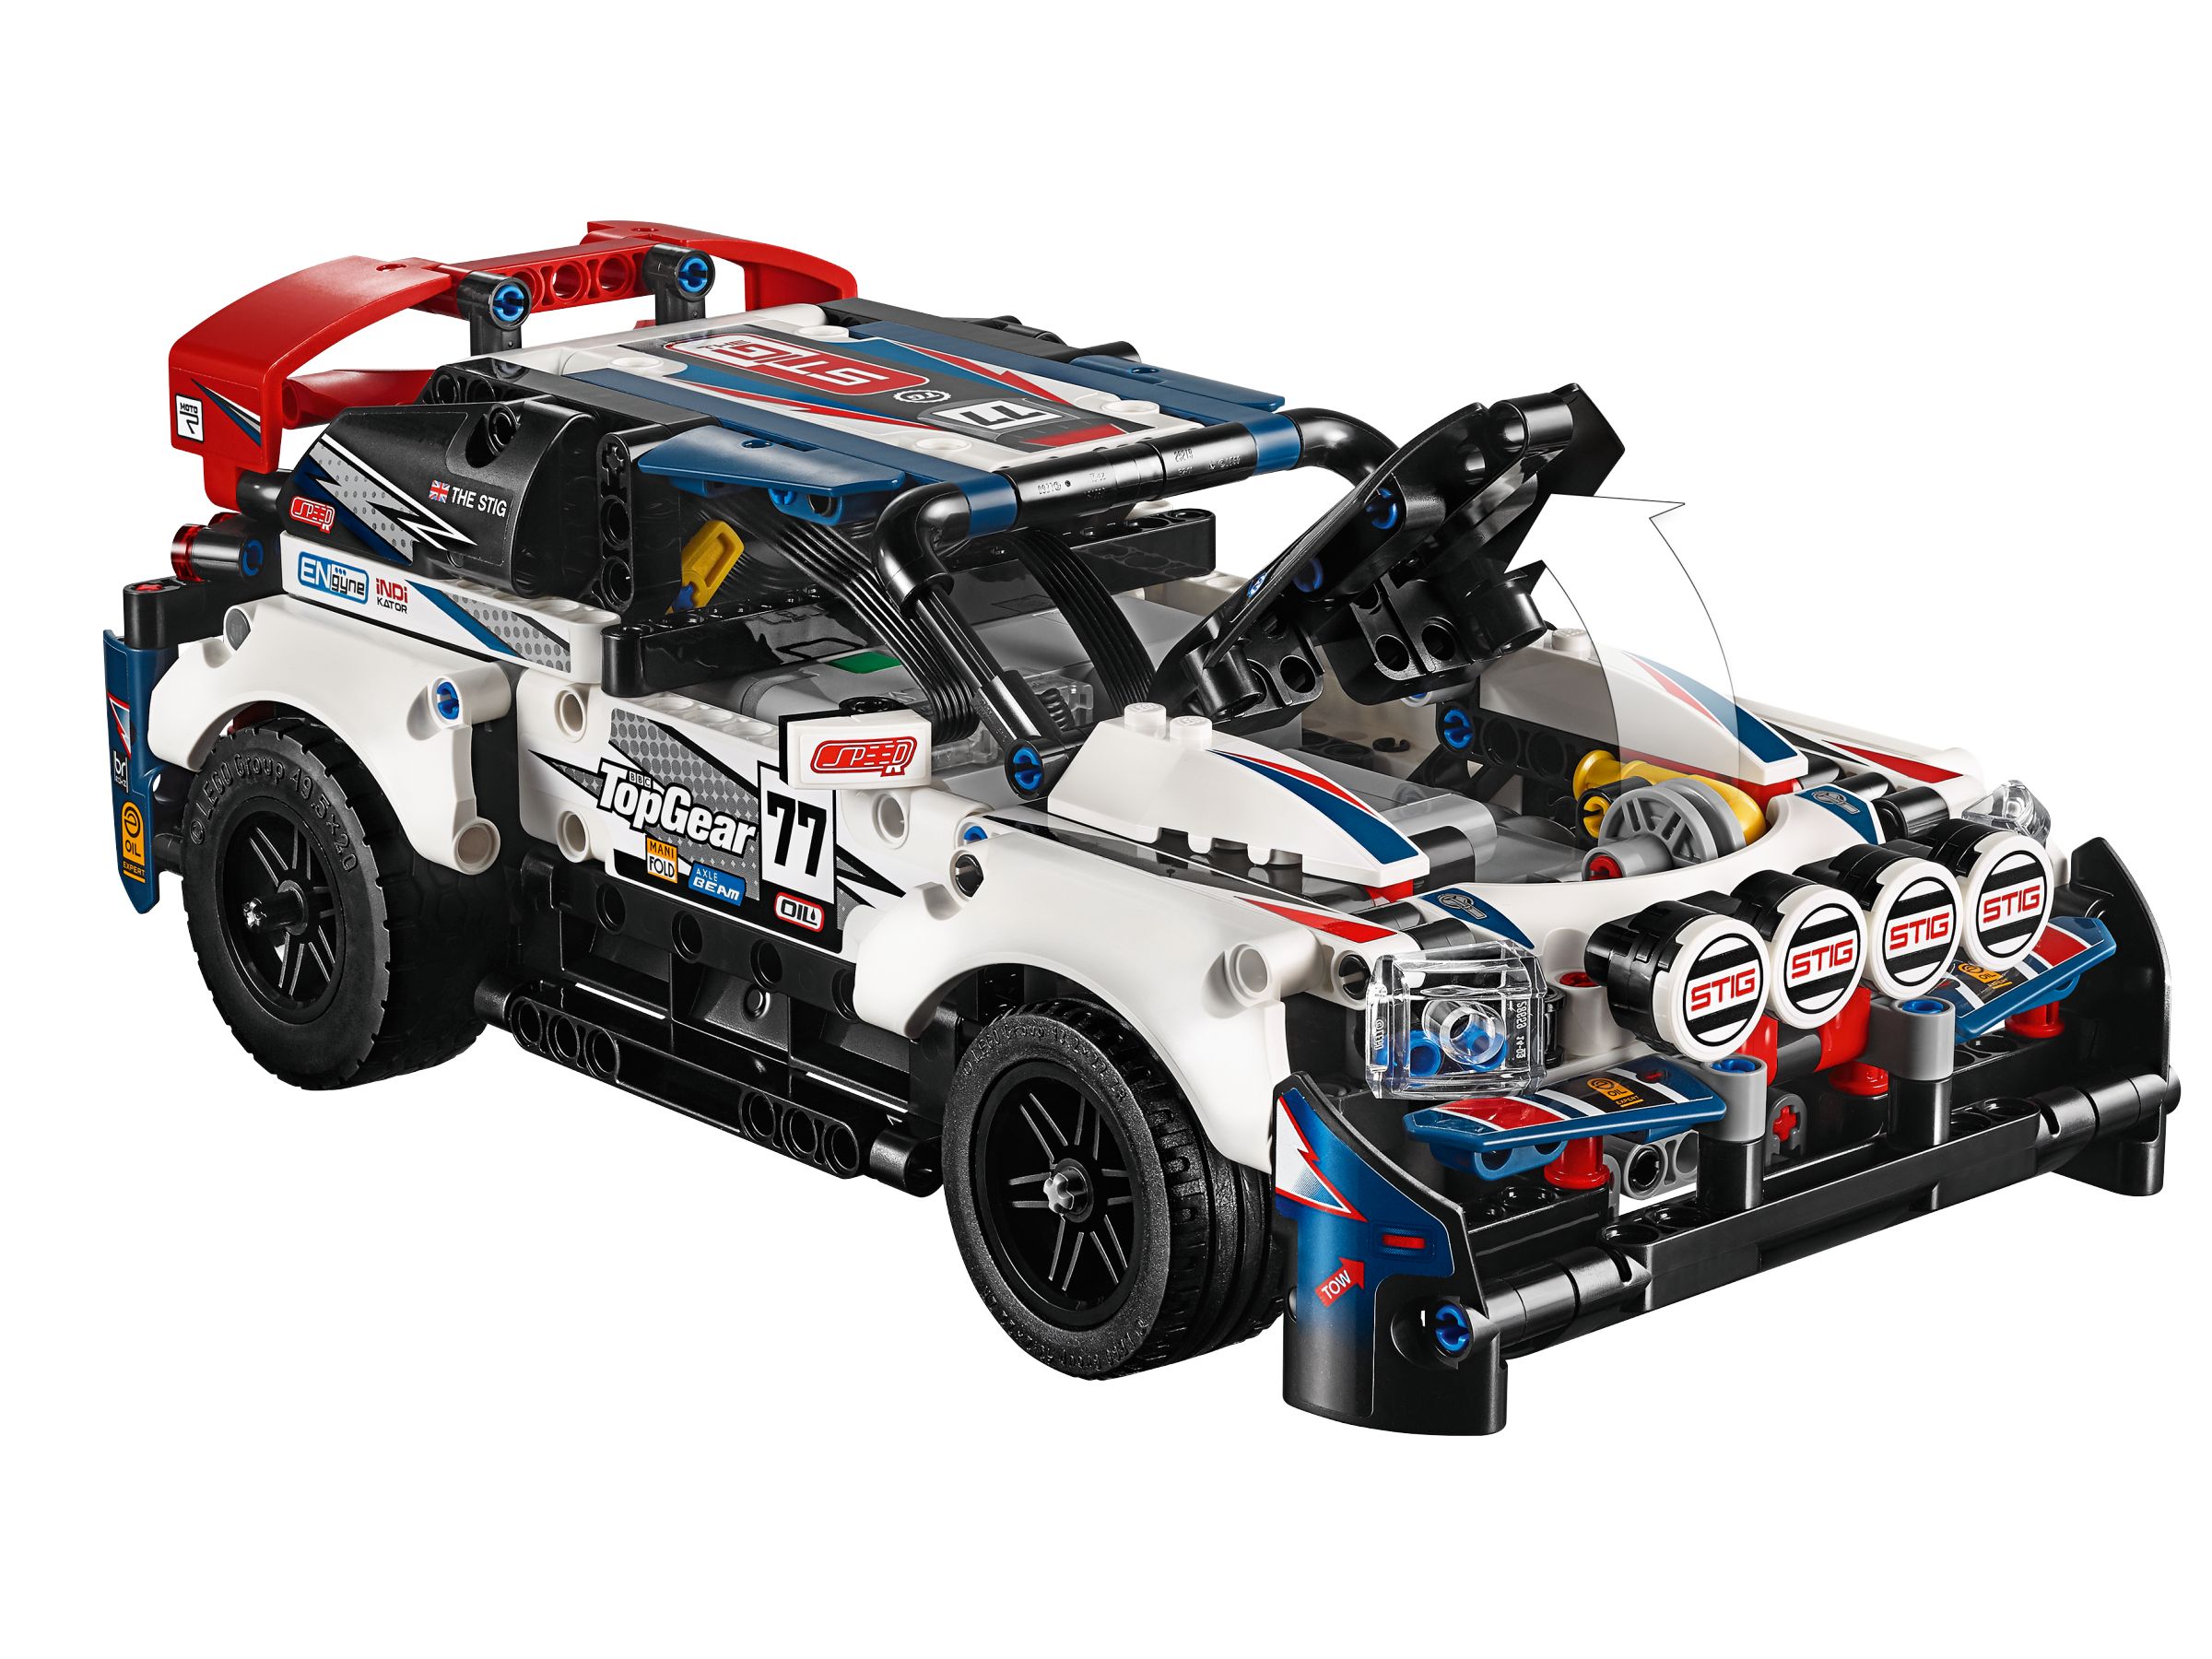 LEGO Technic 42109 Top-Gear Ralleyauto mit App-Steuerung LEGO_42109_alt4.jpg